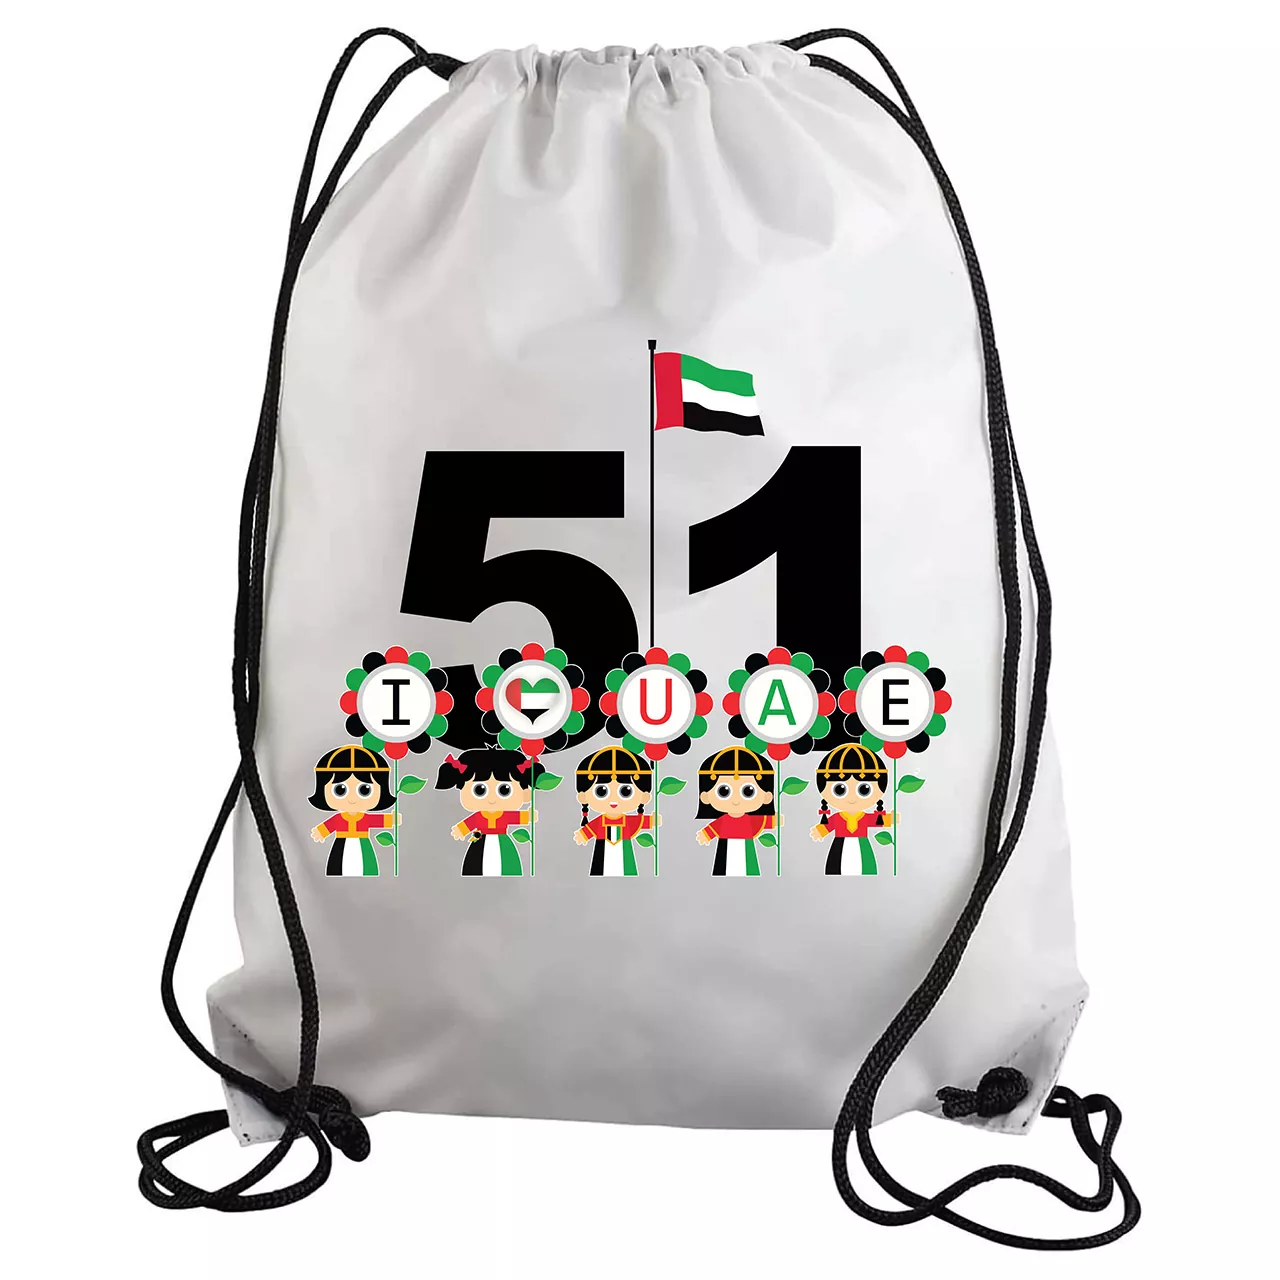 UAE National Day Drawstring bag